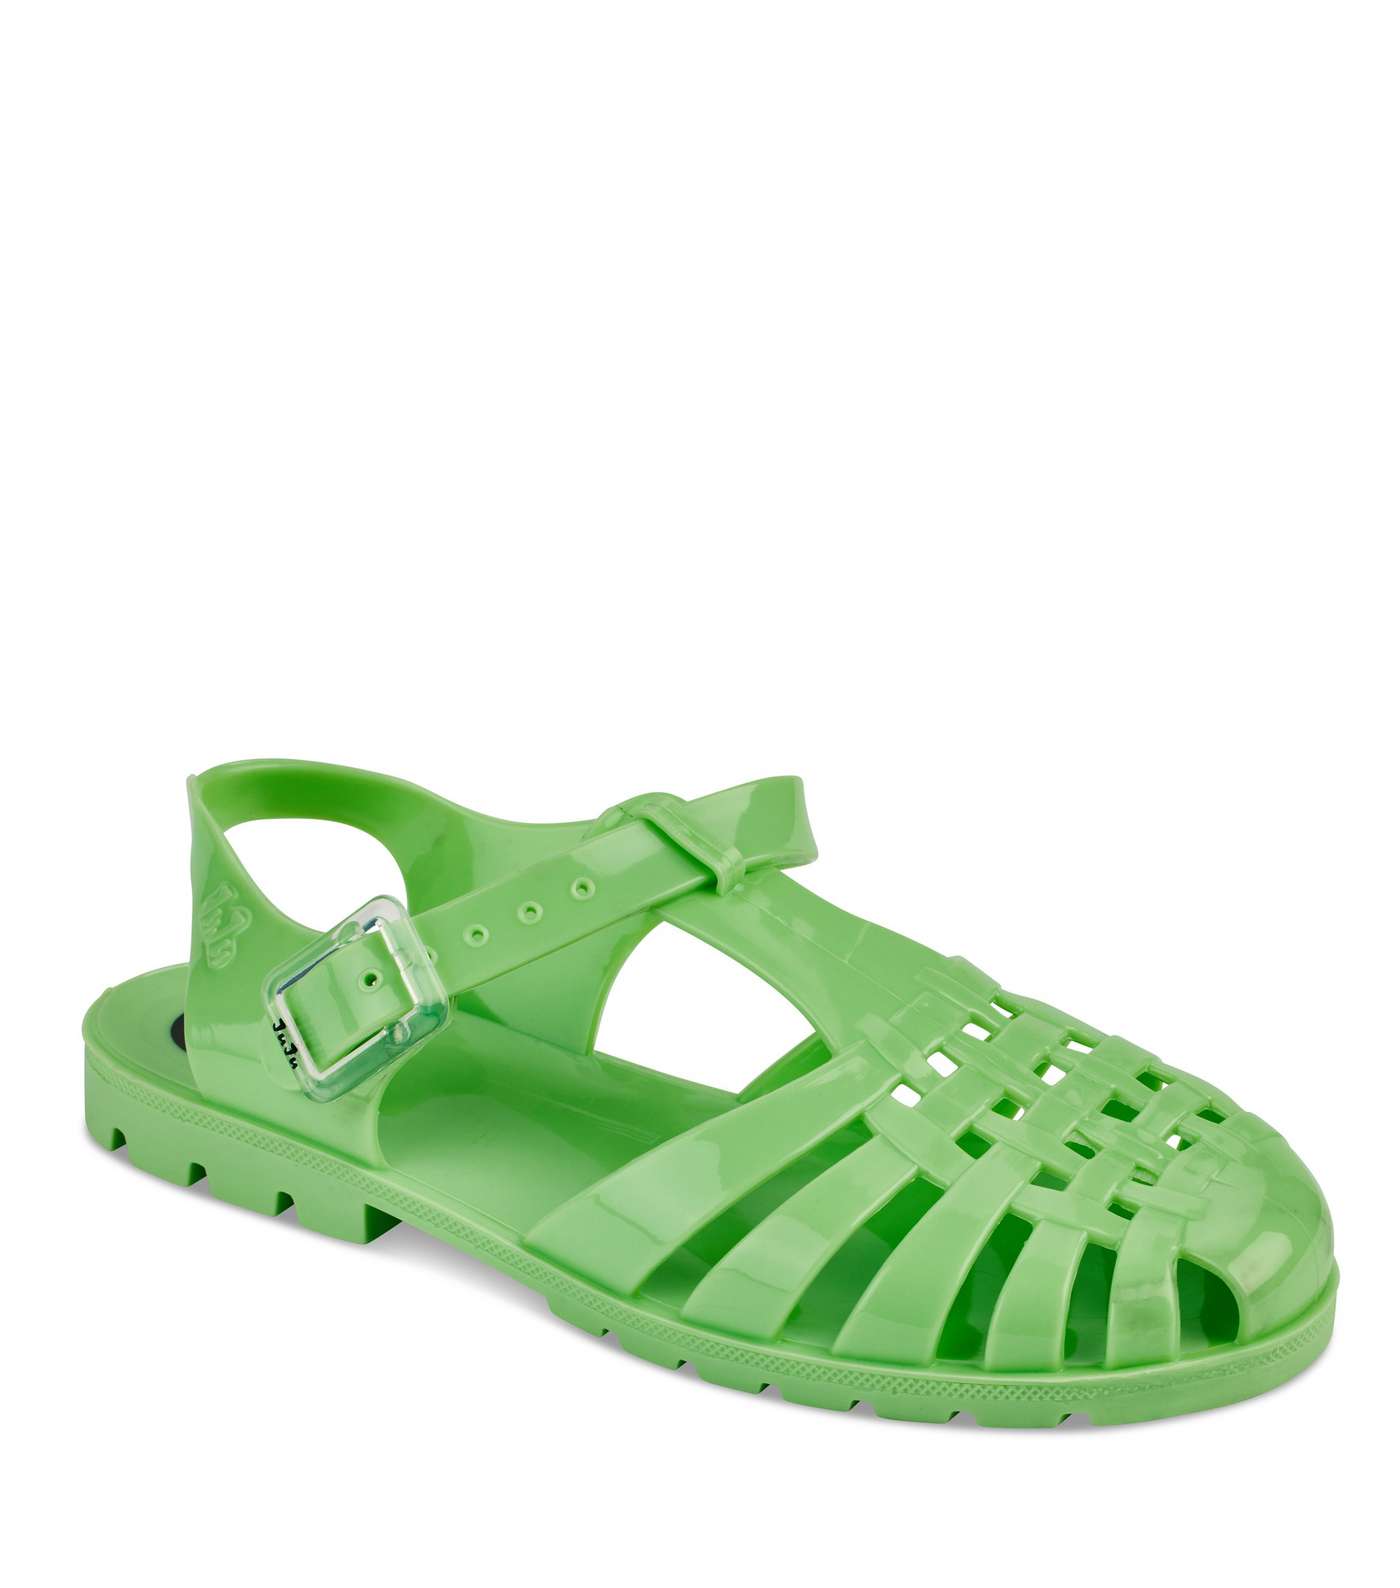 JUJU Light Green Jelly Sandals Image 2